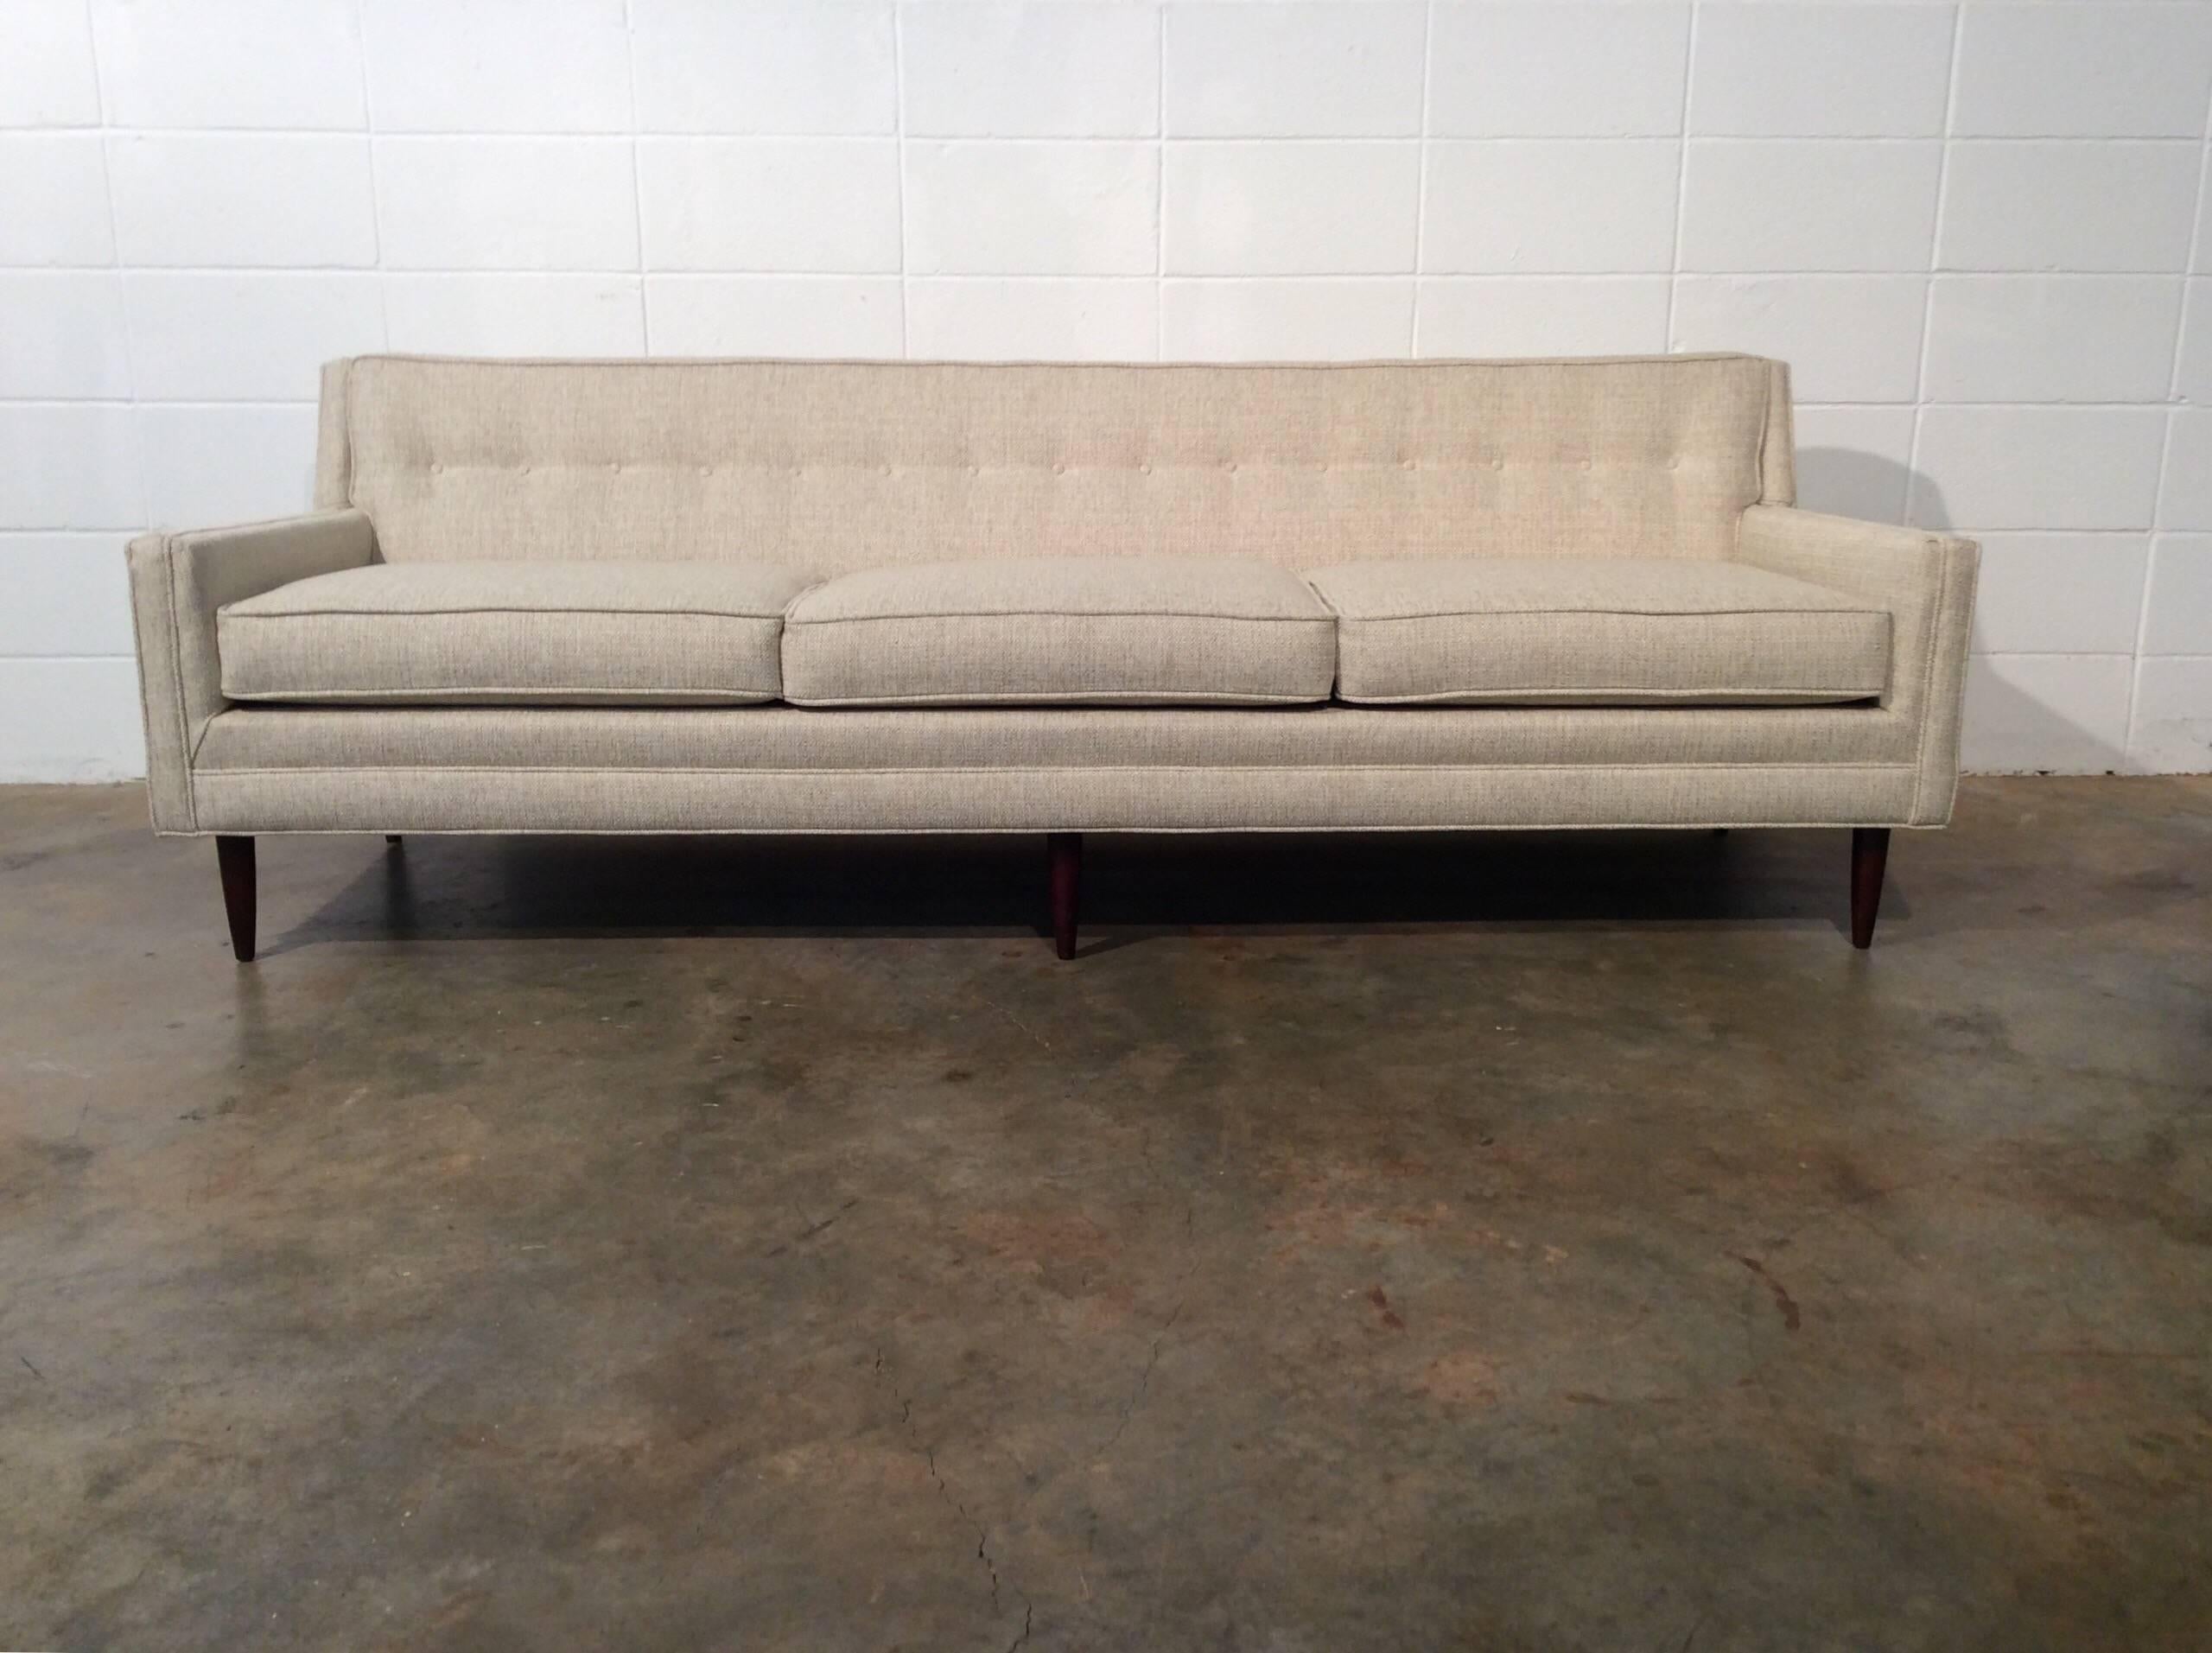 Restored Mid-Century Modern Sofa, Sleek Lines, Neutral Color 4